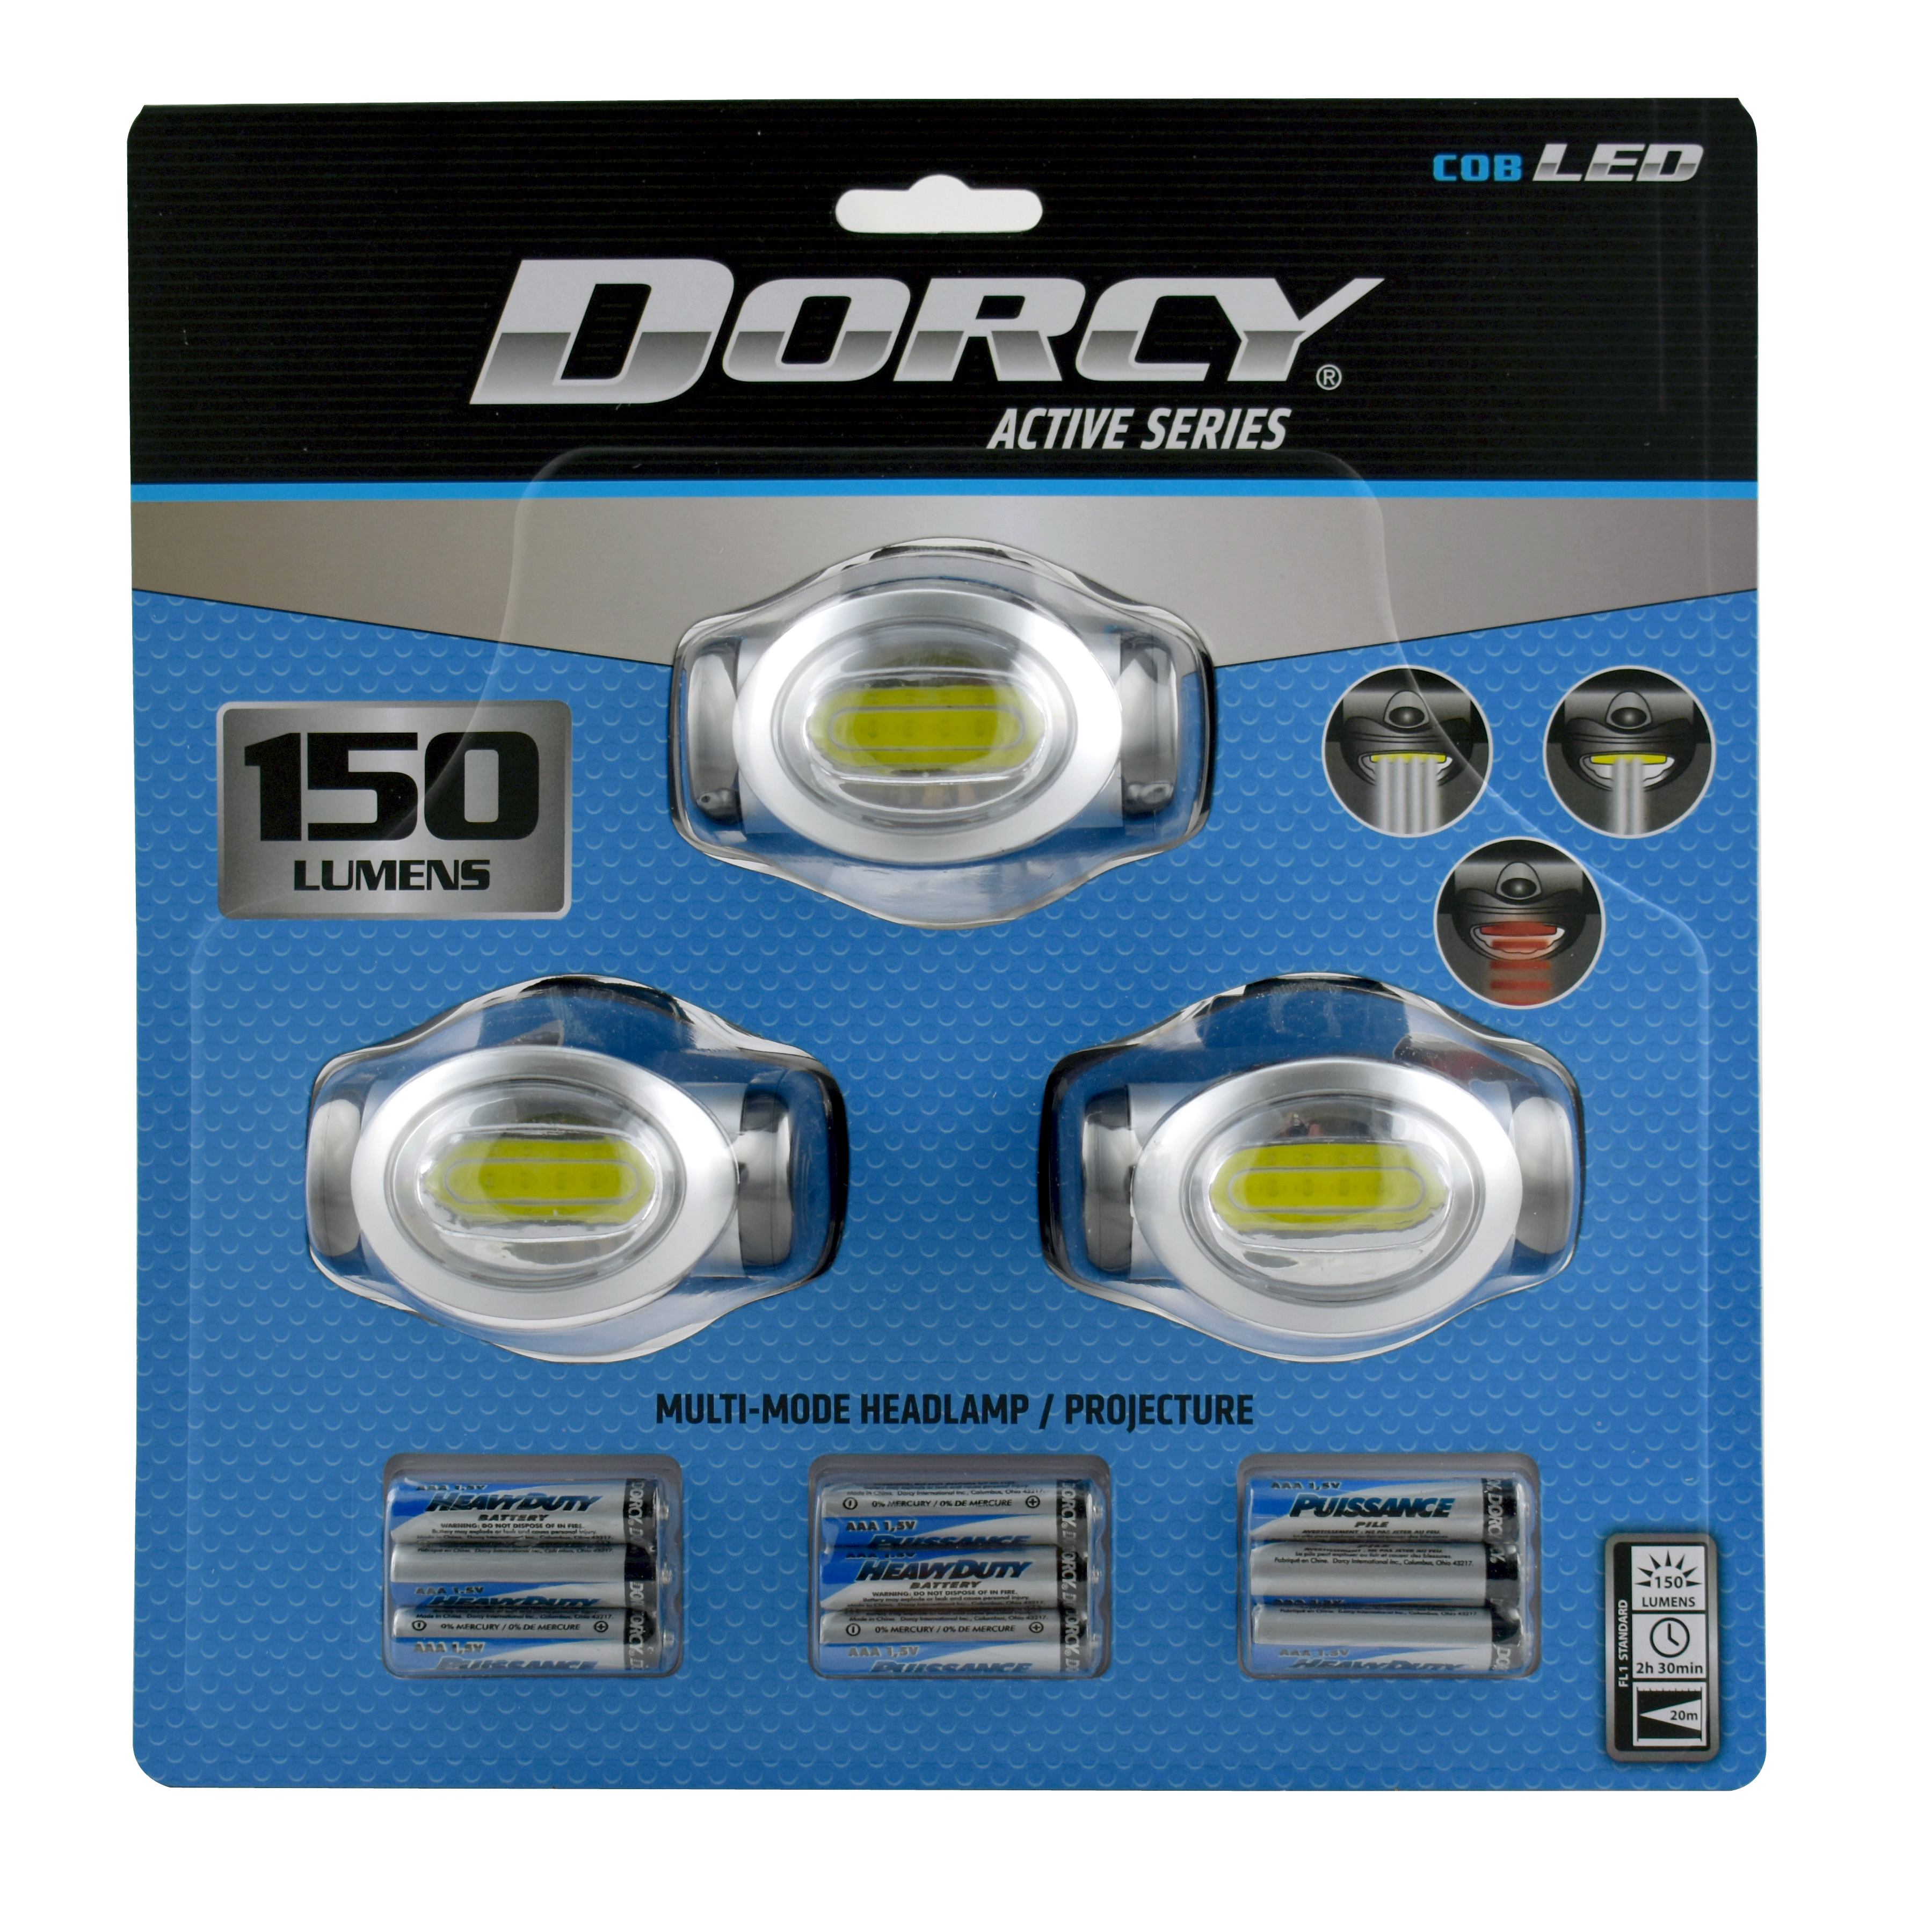 Dorcy 150 Lumen COB LED Headlight Combo Pack